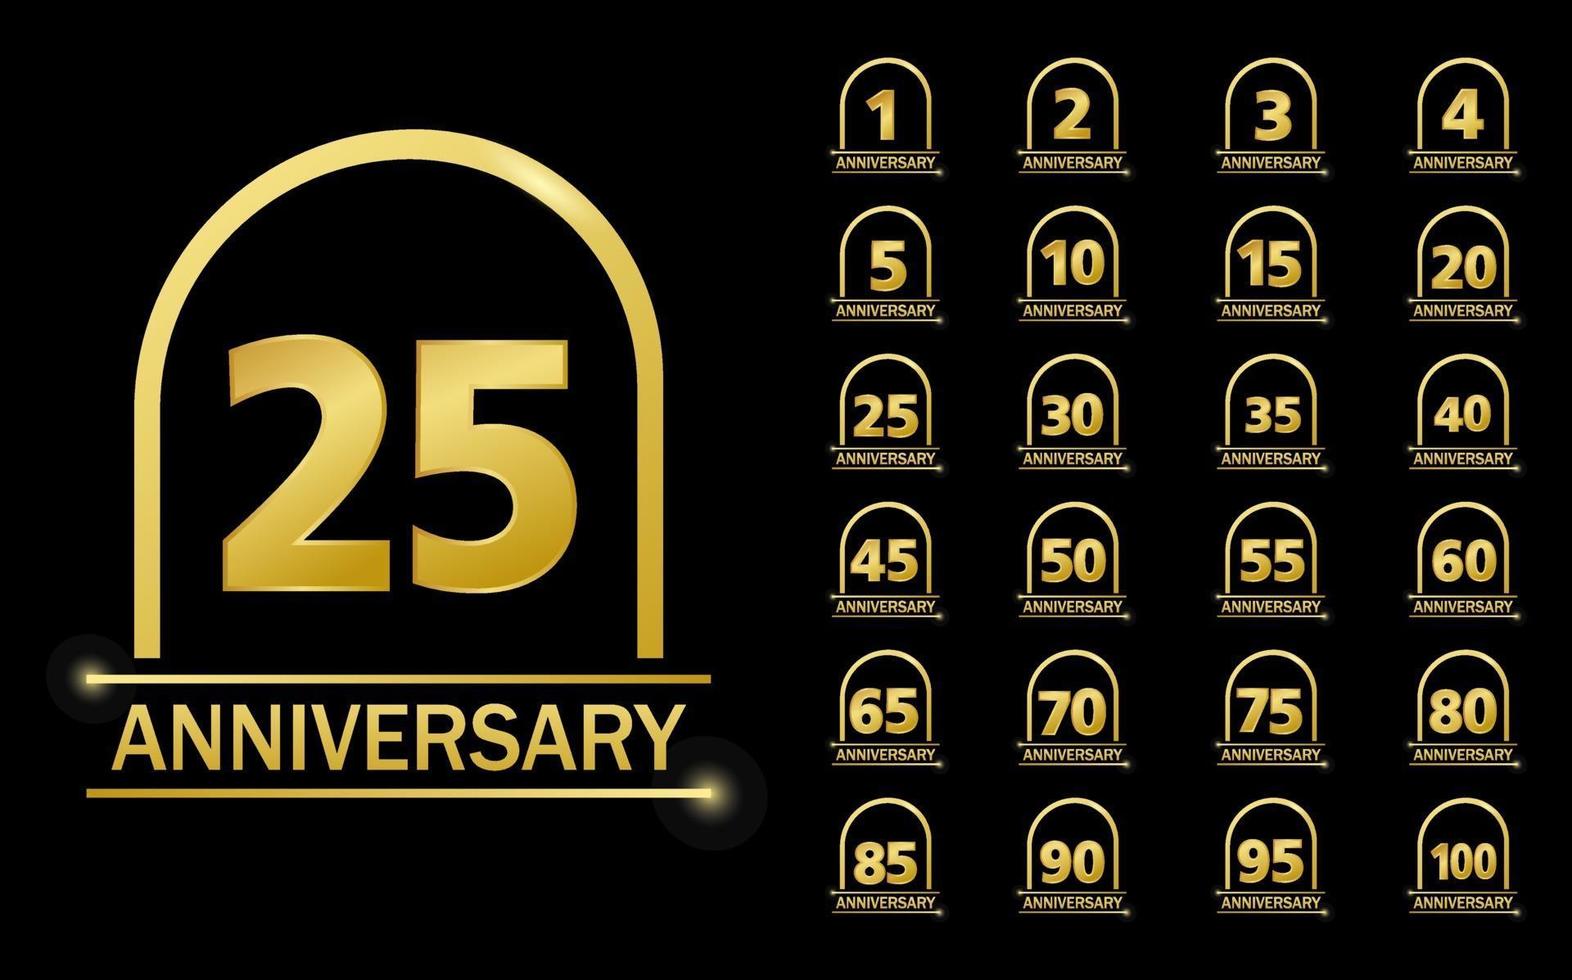 Anniversary celebration logotype set design vector